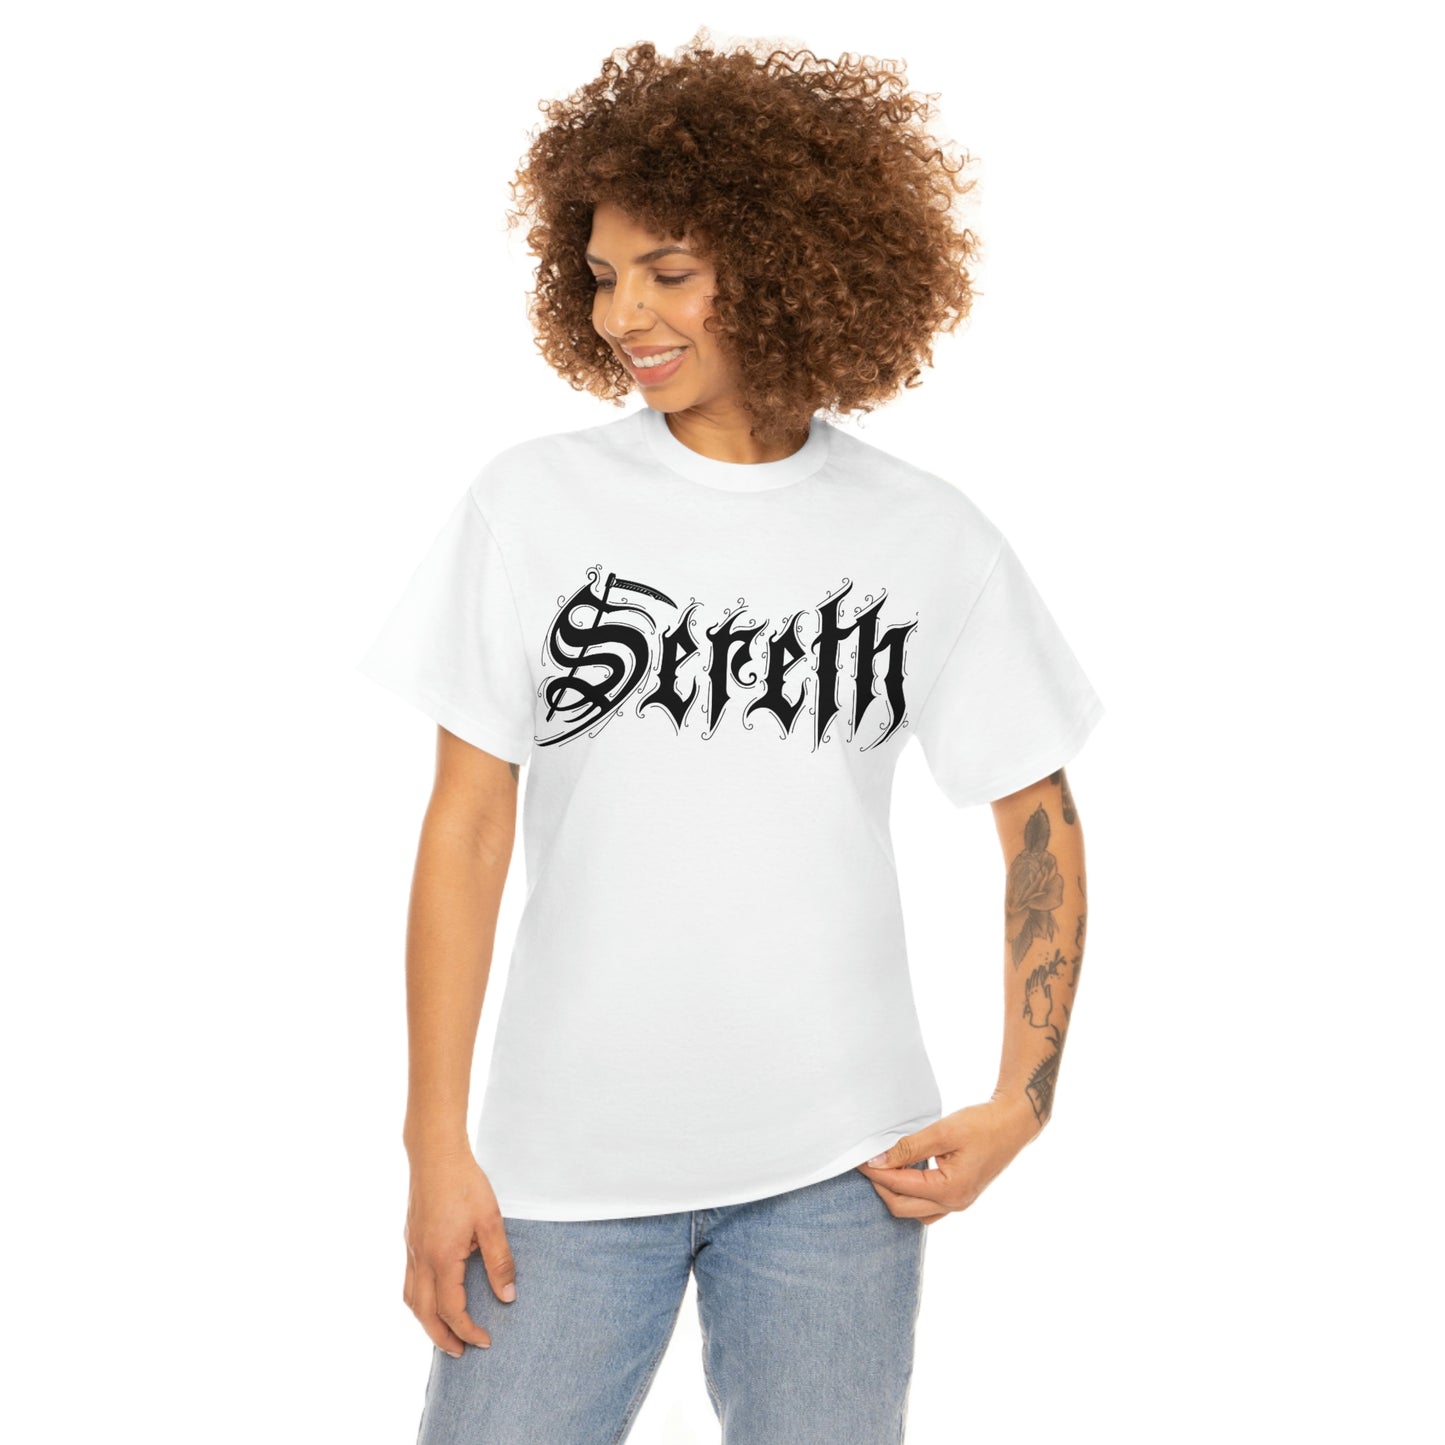 Sereth - Logo (UK)